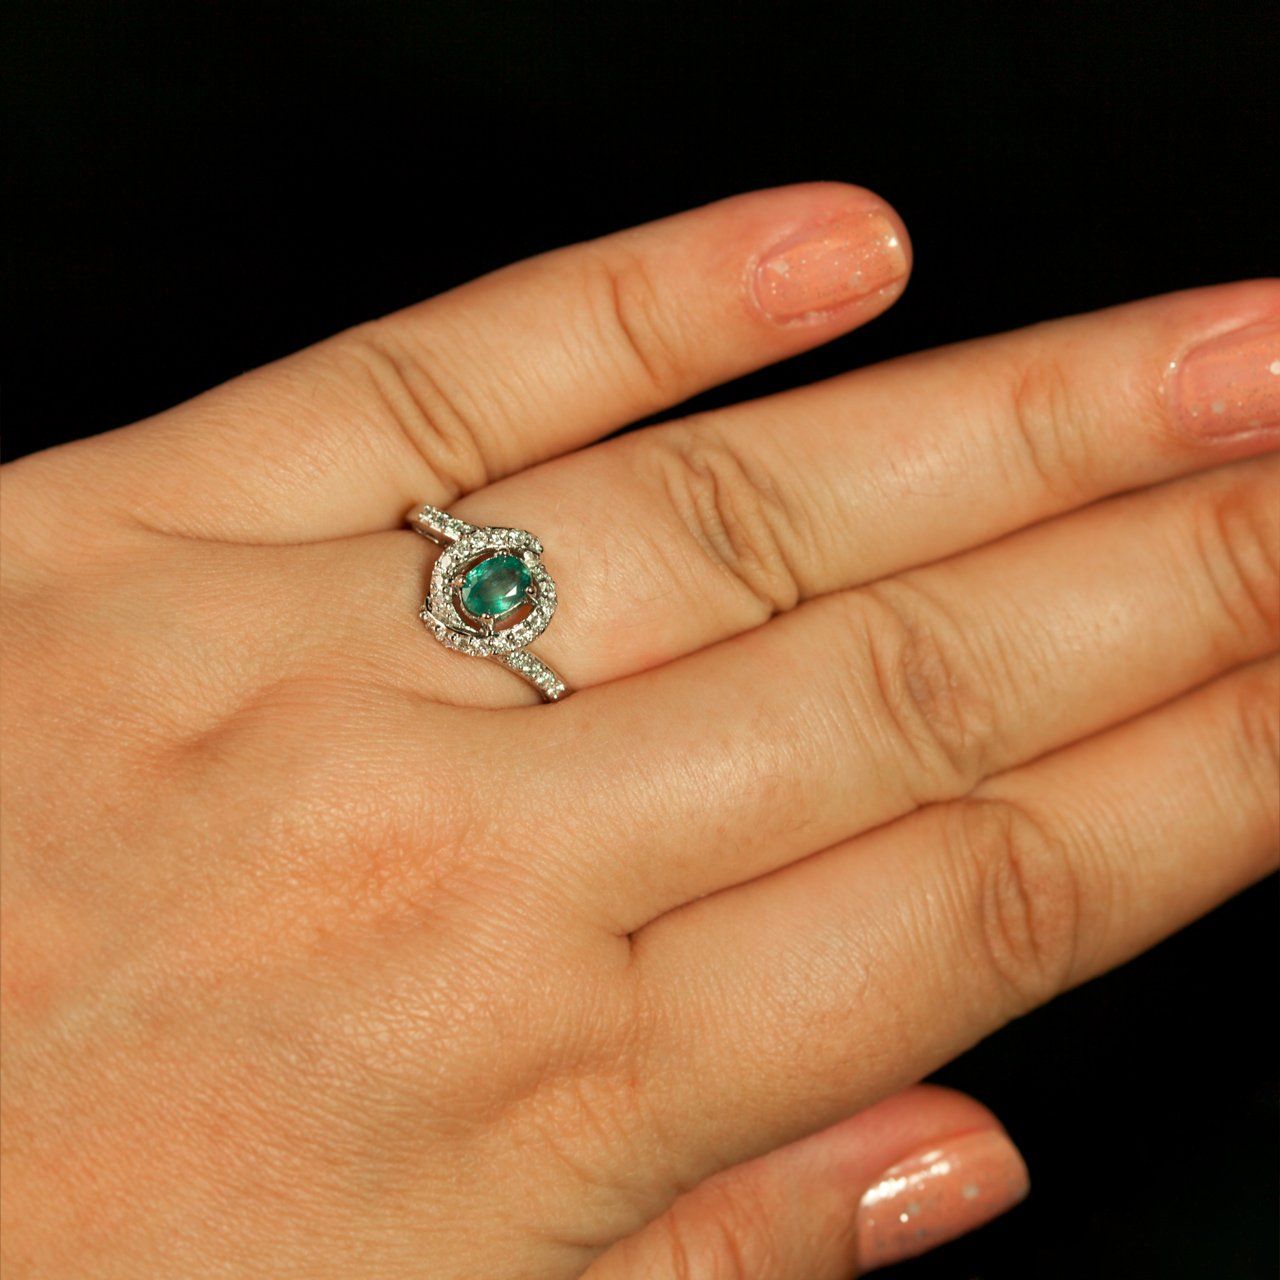 June Birthstone! $5000 Brilliant Natural Alexandrite Diamond 18k White Gold Engagement Ring - The Alexandrite